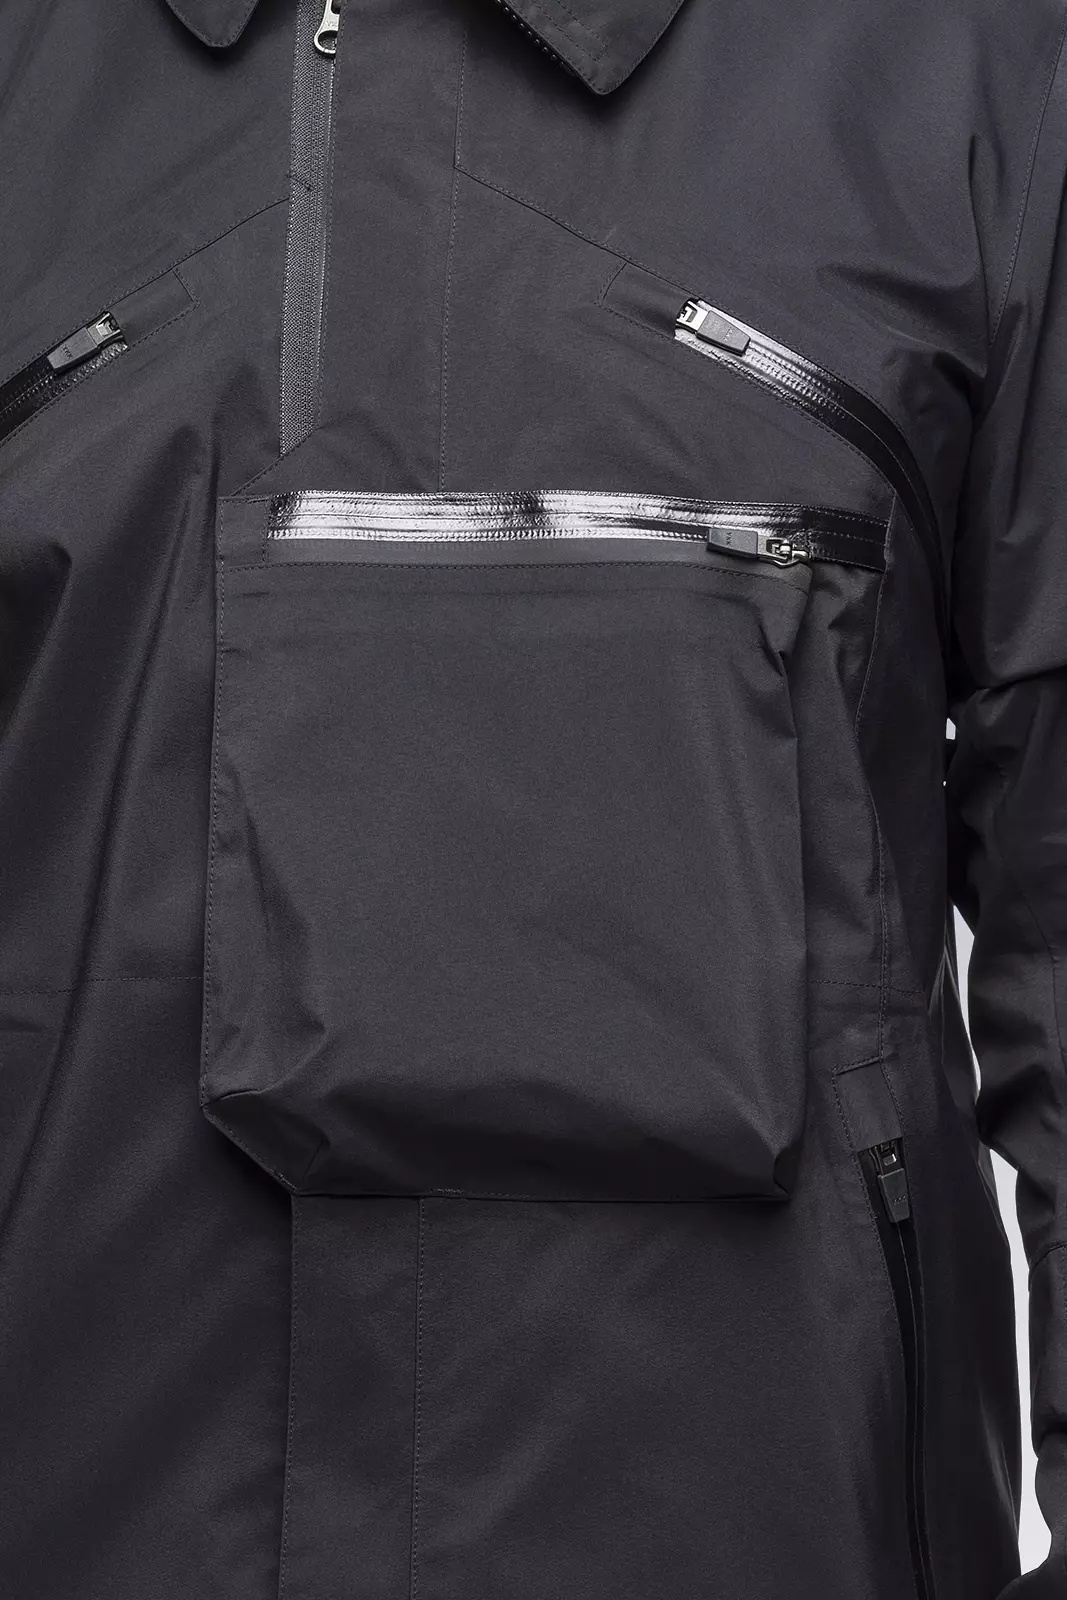 J1A-GTKR-BKS KR EX 3L Gore-Tex® Pro Interops Jacket Black with size 5 WR zippers in gloss black - 23